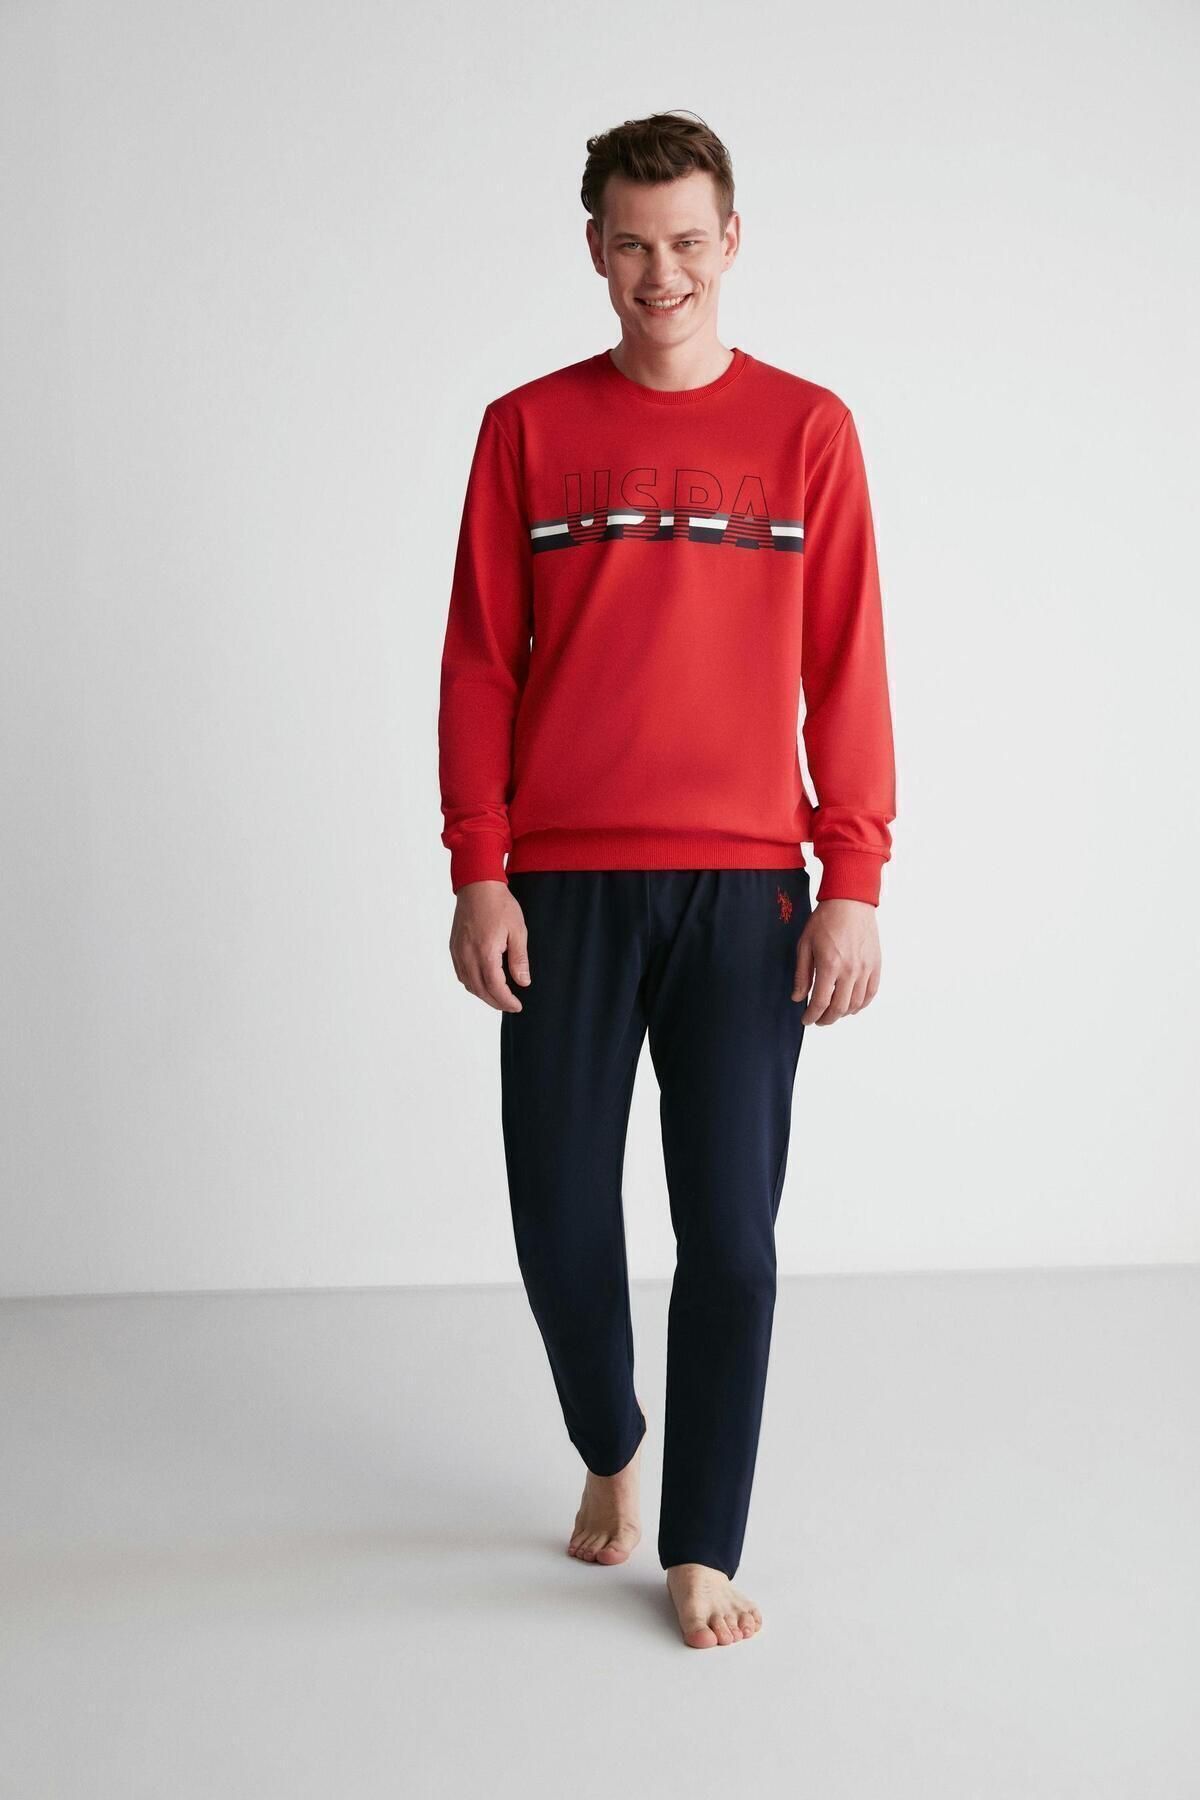 U.S. Polo Assn. Erkek Pamuklu Kırmızı Sweatshirt-Eşofmanaltı Düz Paça Pijama Takımı